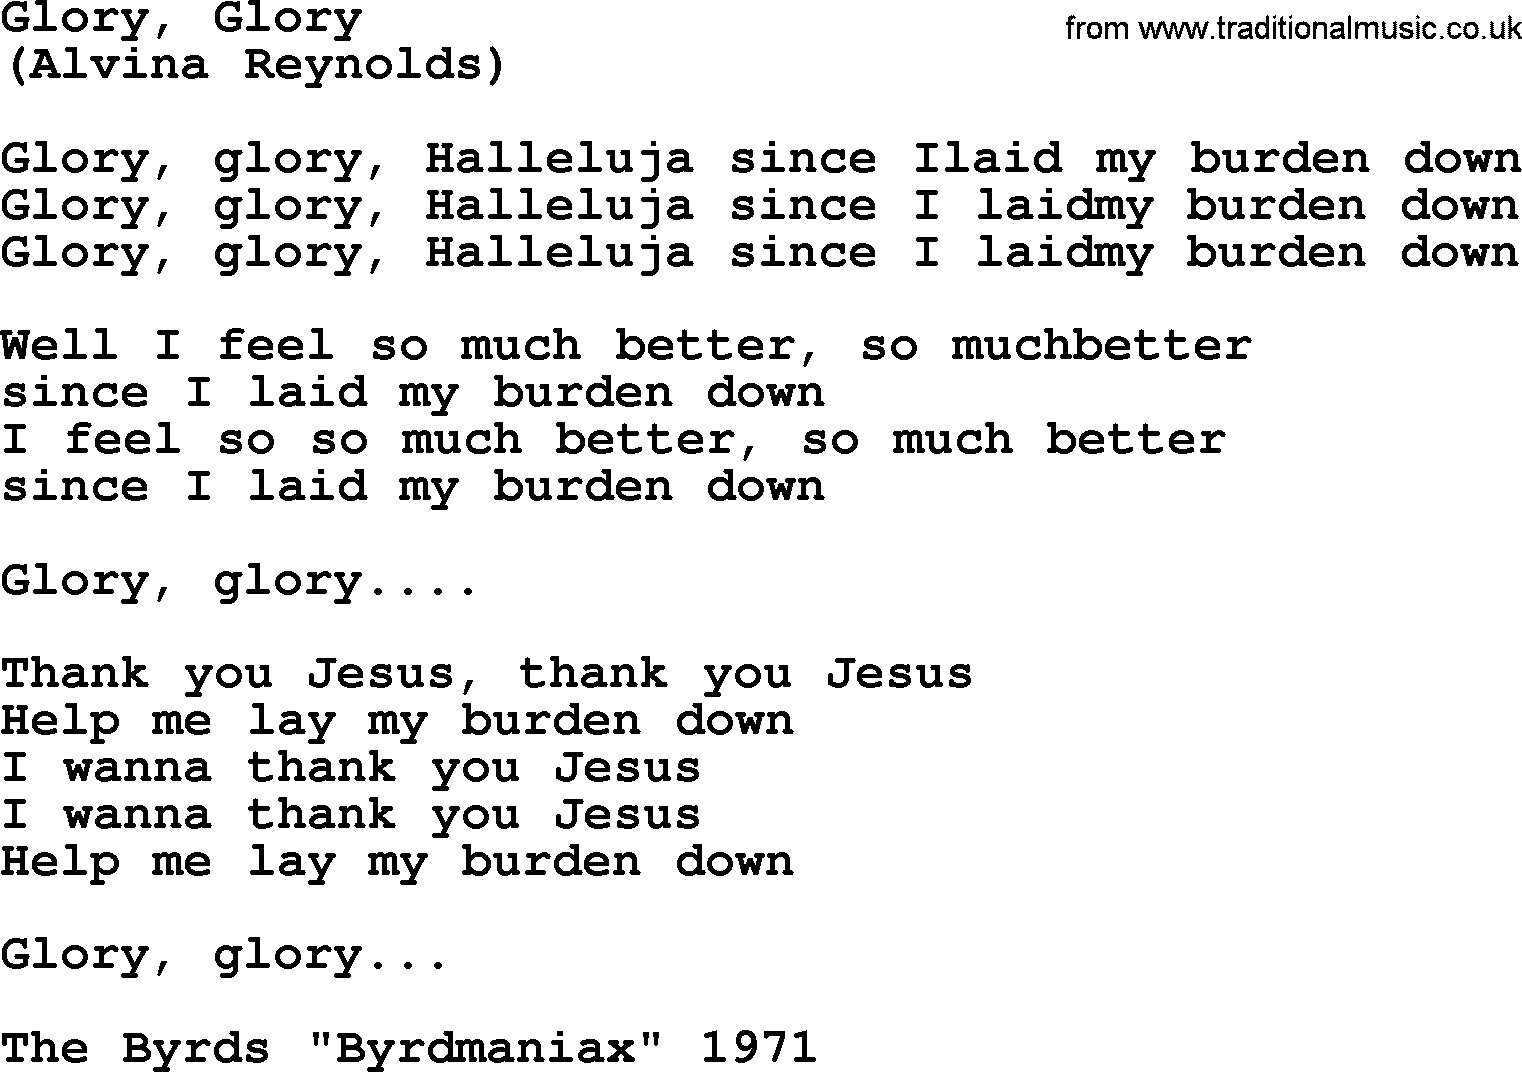 The Byrds song Glory, Glory, lyrics